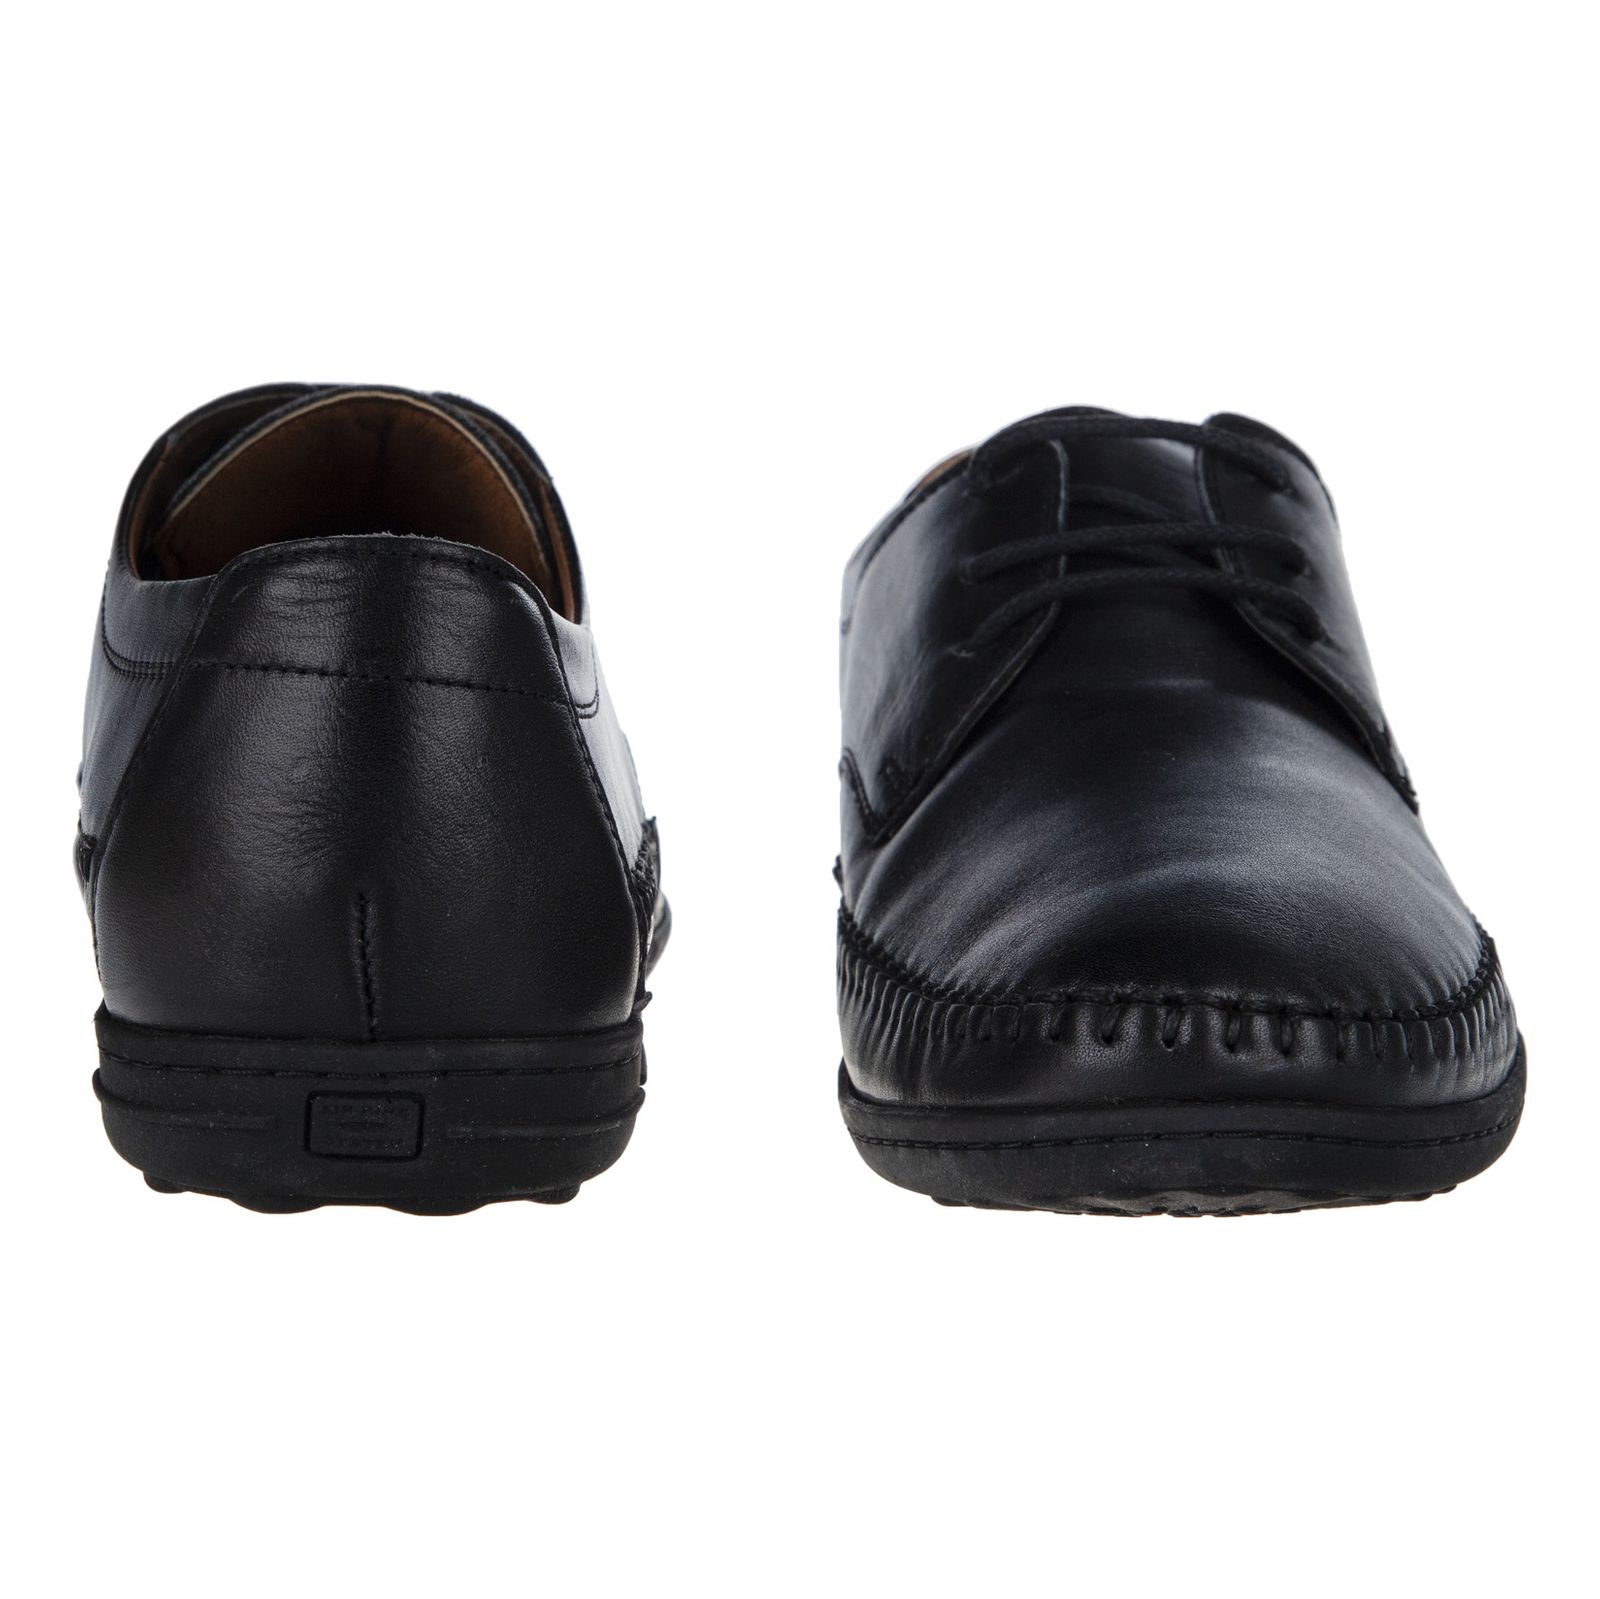 کفش روزمره مردانه پولاریس مدل 100296999-101 - مشکی - 5